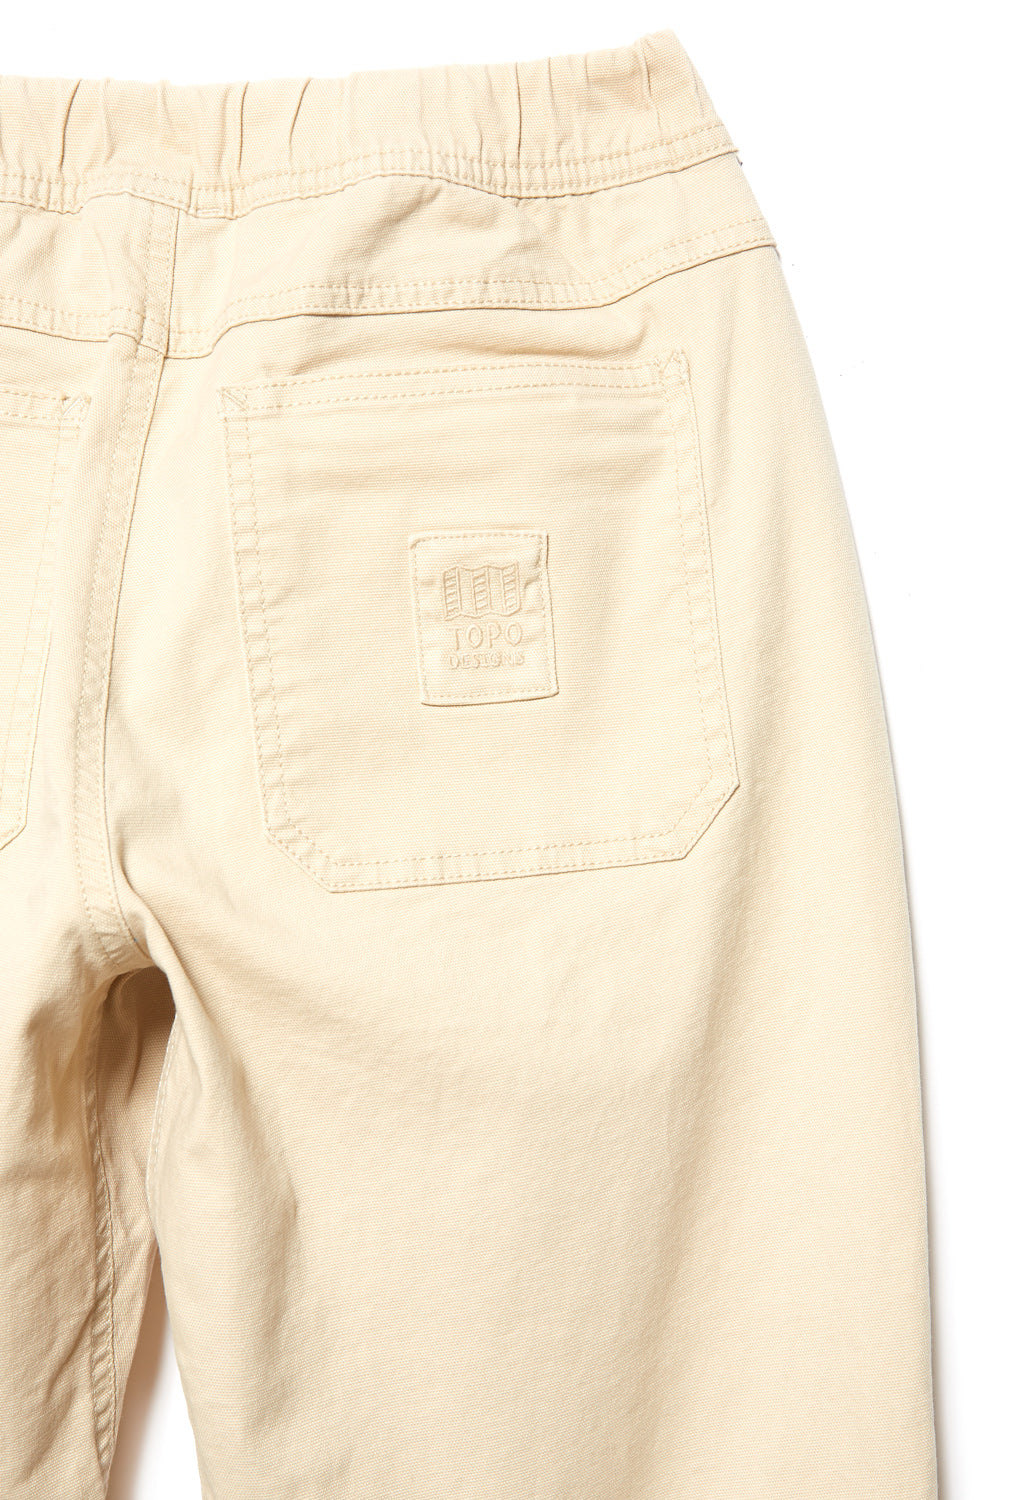 Topo Designs Women's Dirt Pants - Sand